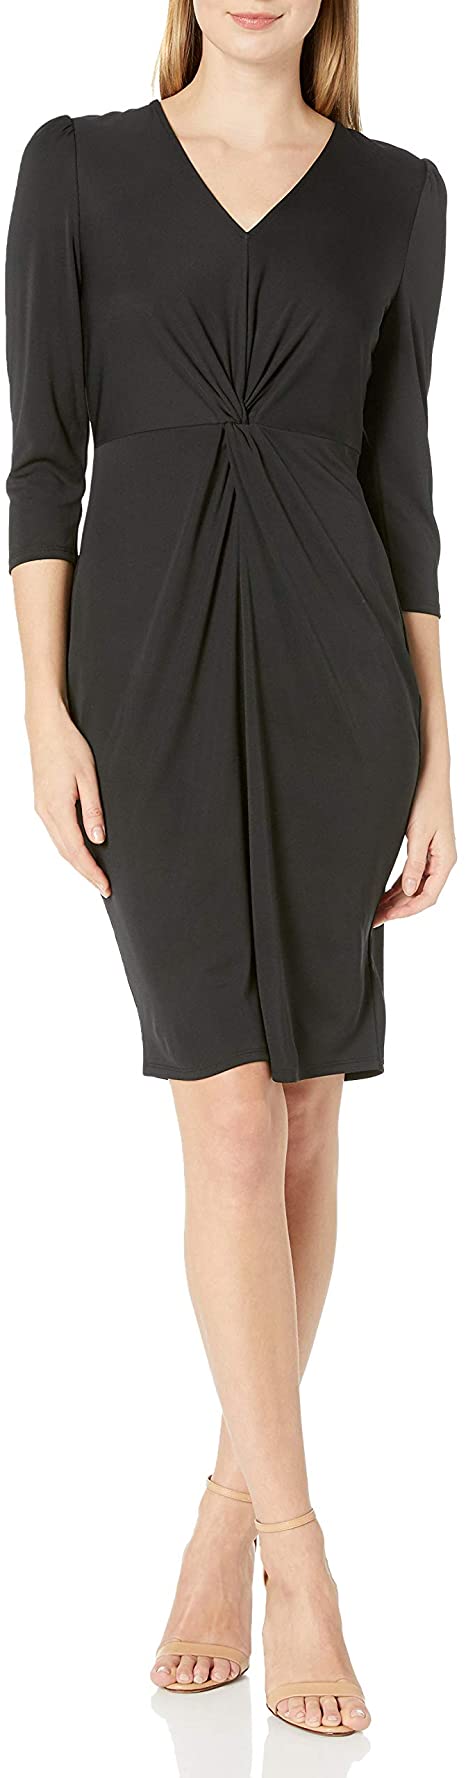 Best Amazon dresses - Lark & Ro Long Sleeve Matte Jersey Twist Front Dress | 40plusstyle.com